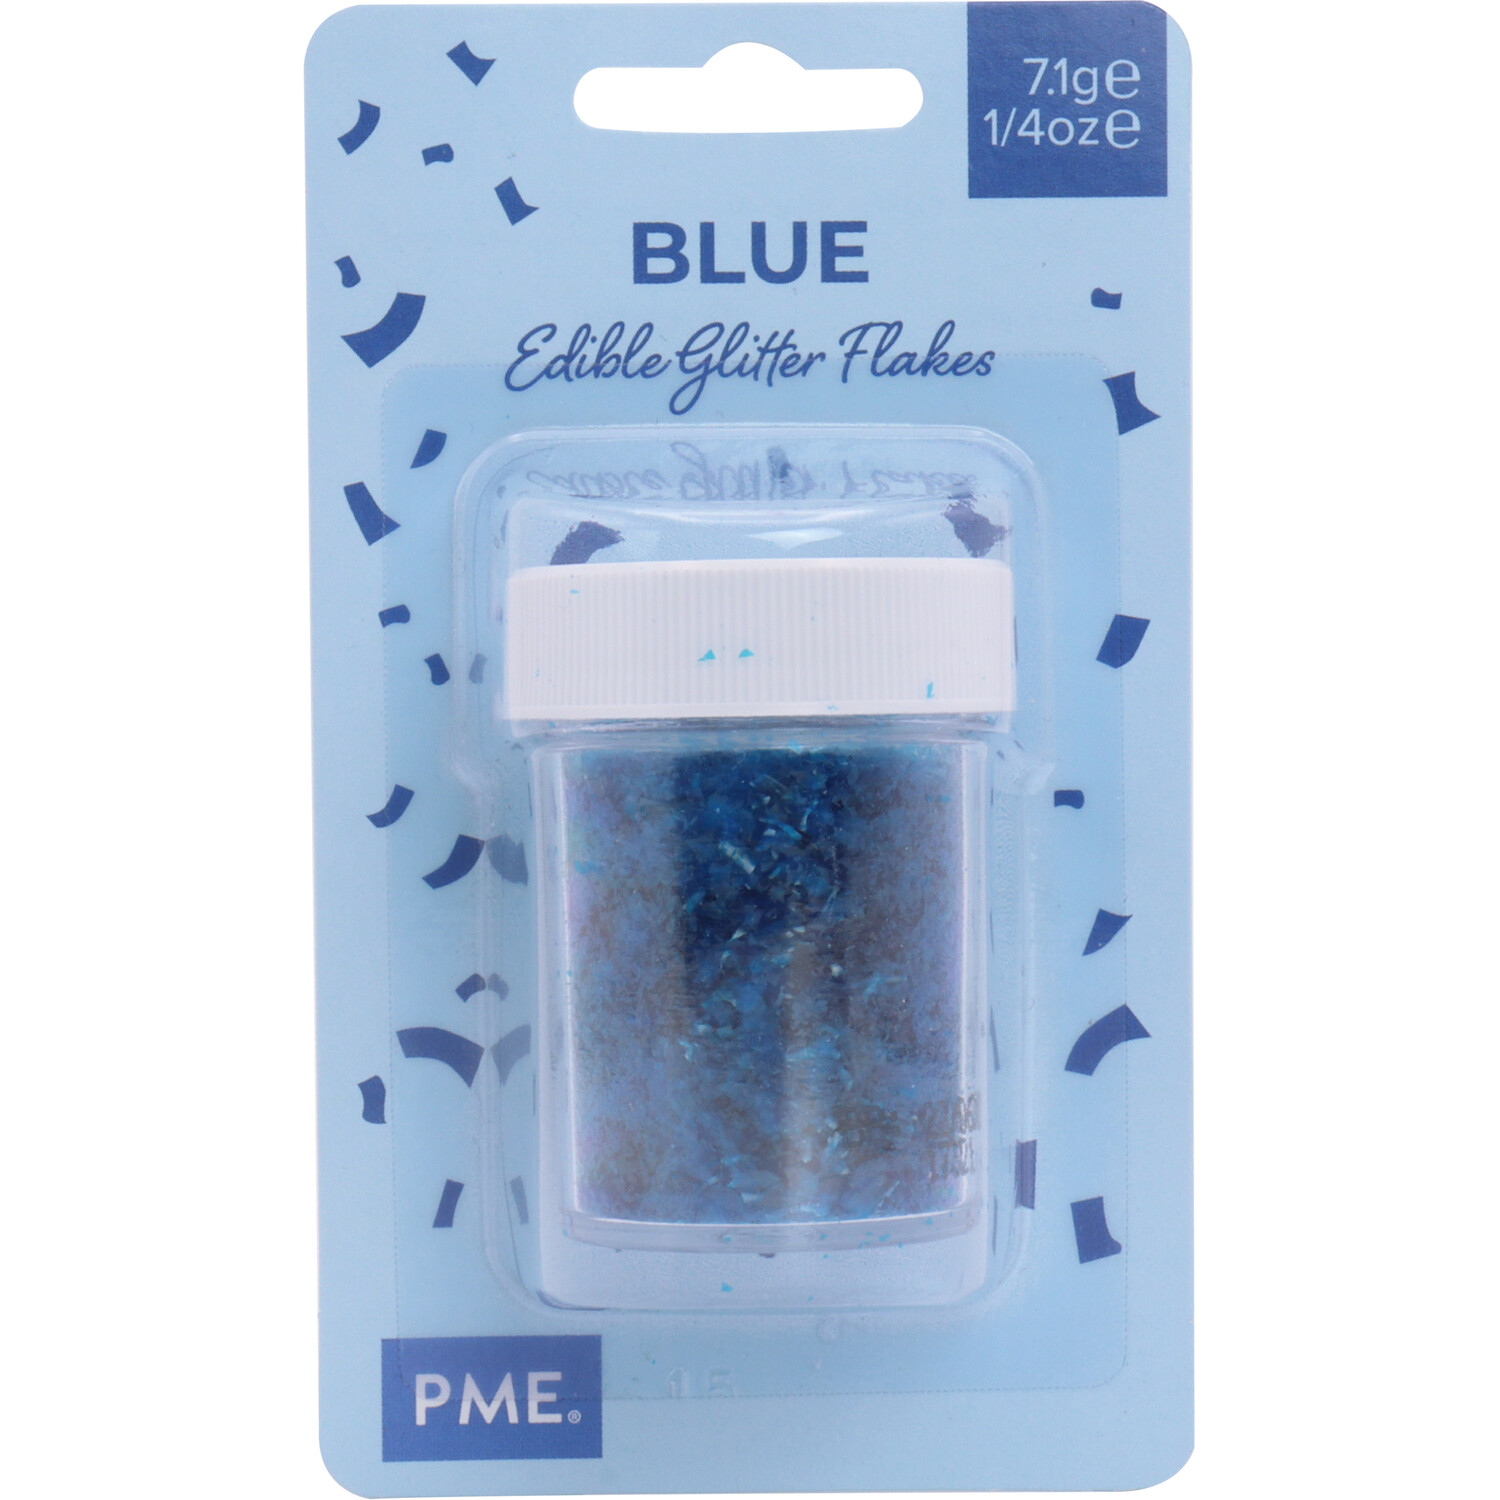 Edible Glitter Flakes - Blue Image 1